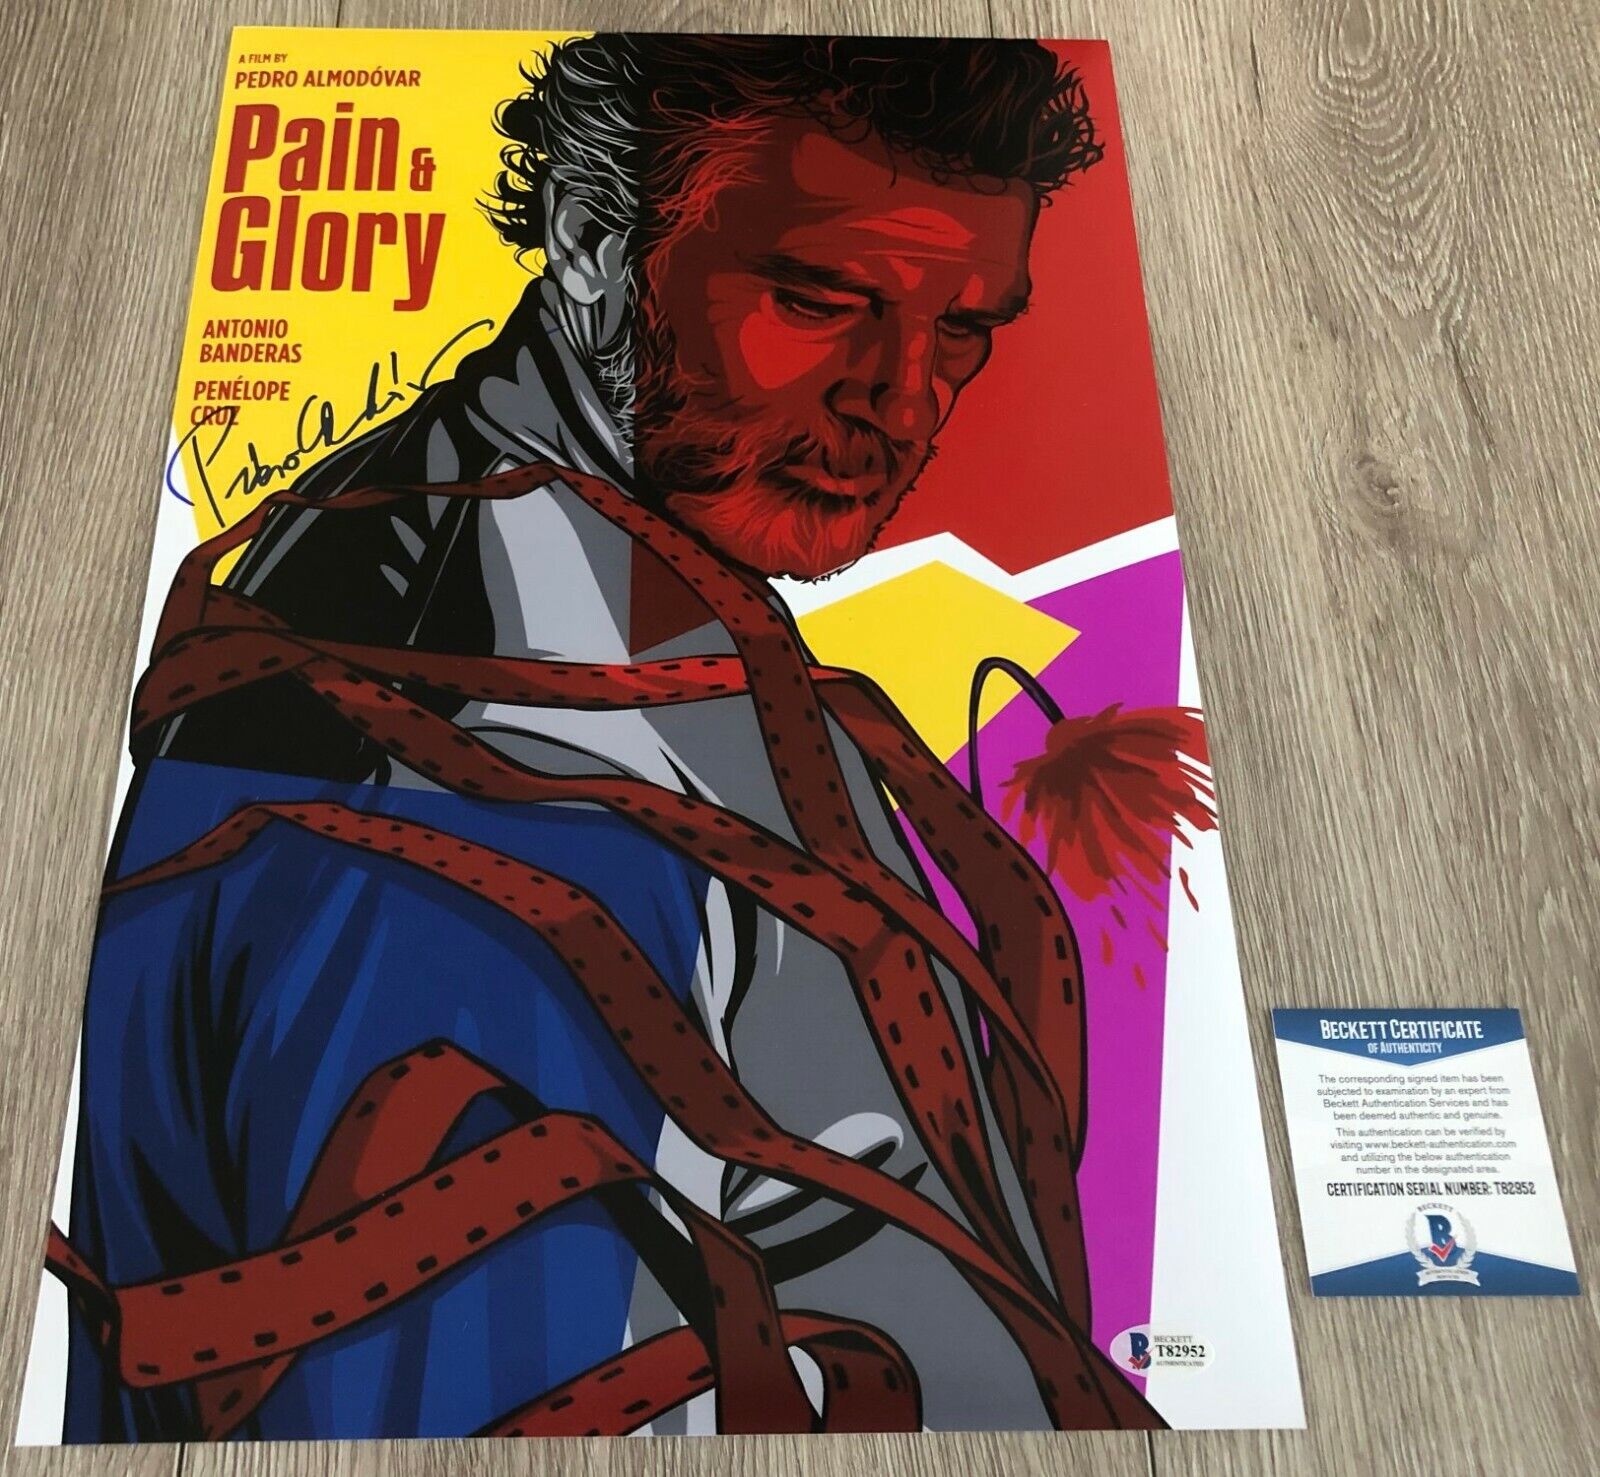 PEDRO ALMODOVAR SIGNED PAIN AND GLORY 12x18 Photo Poster painting w/EXACT PROOF BECKETT BAS COA